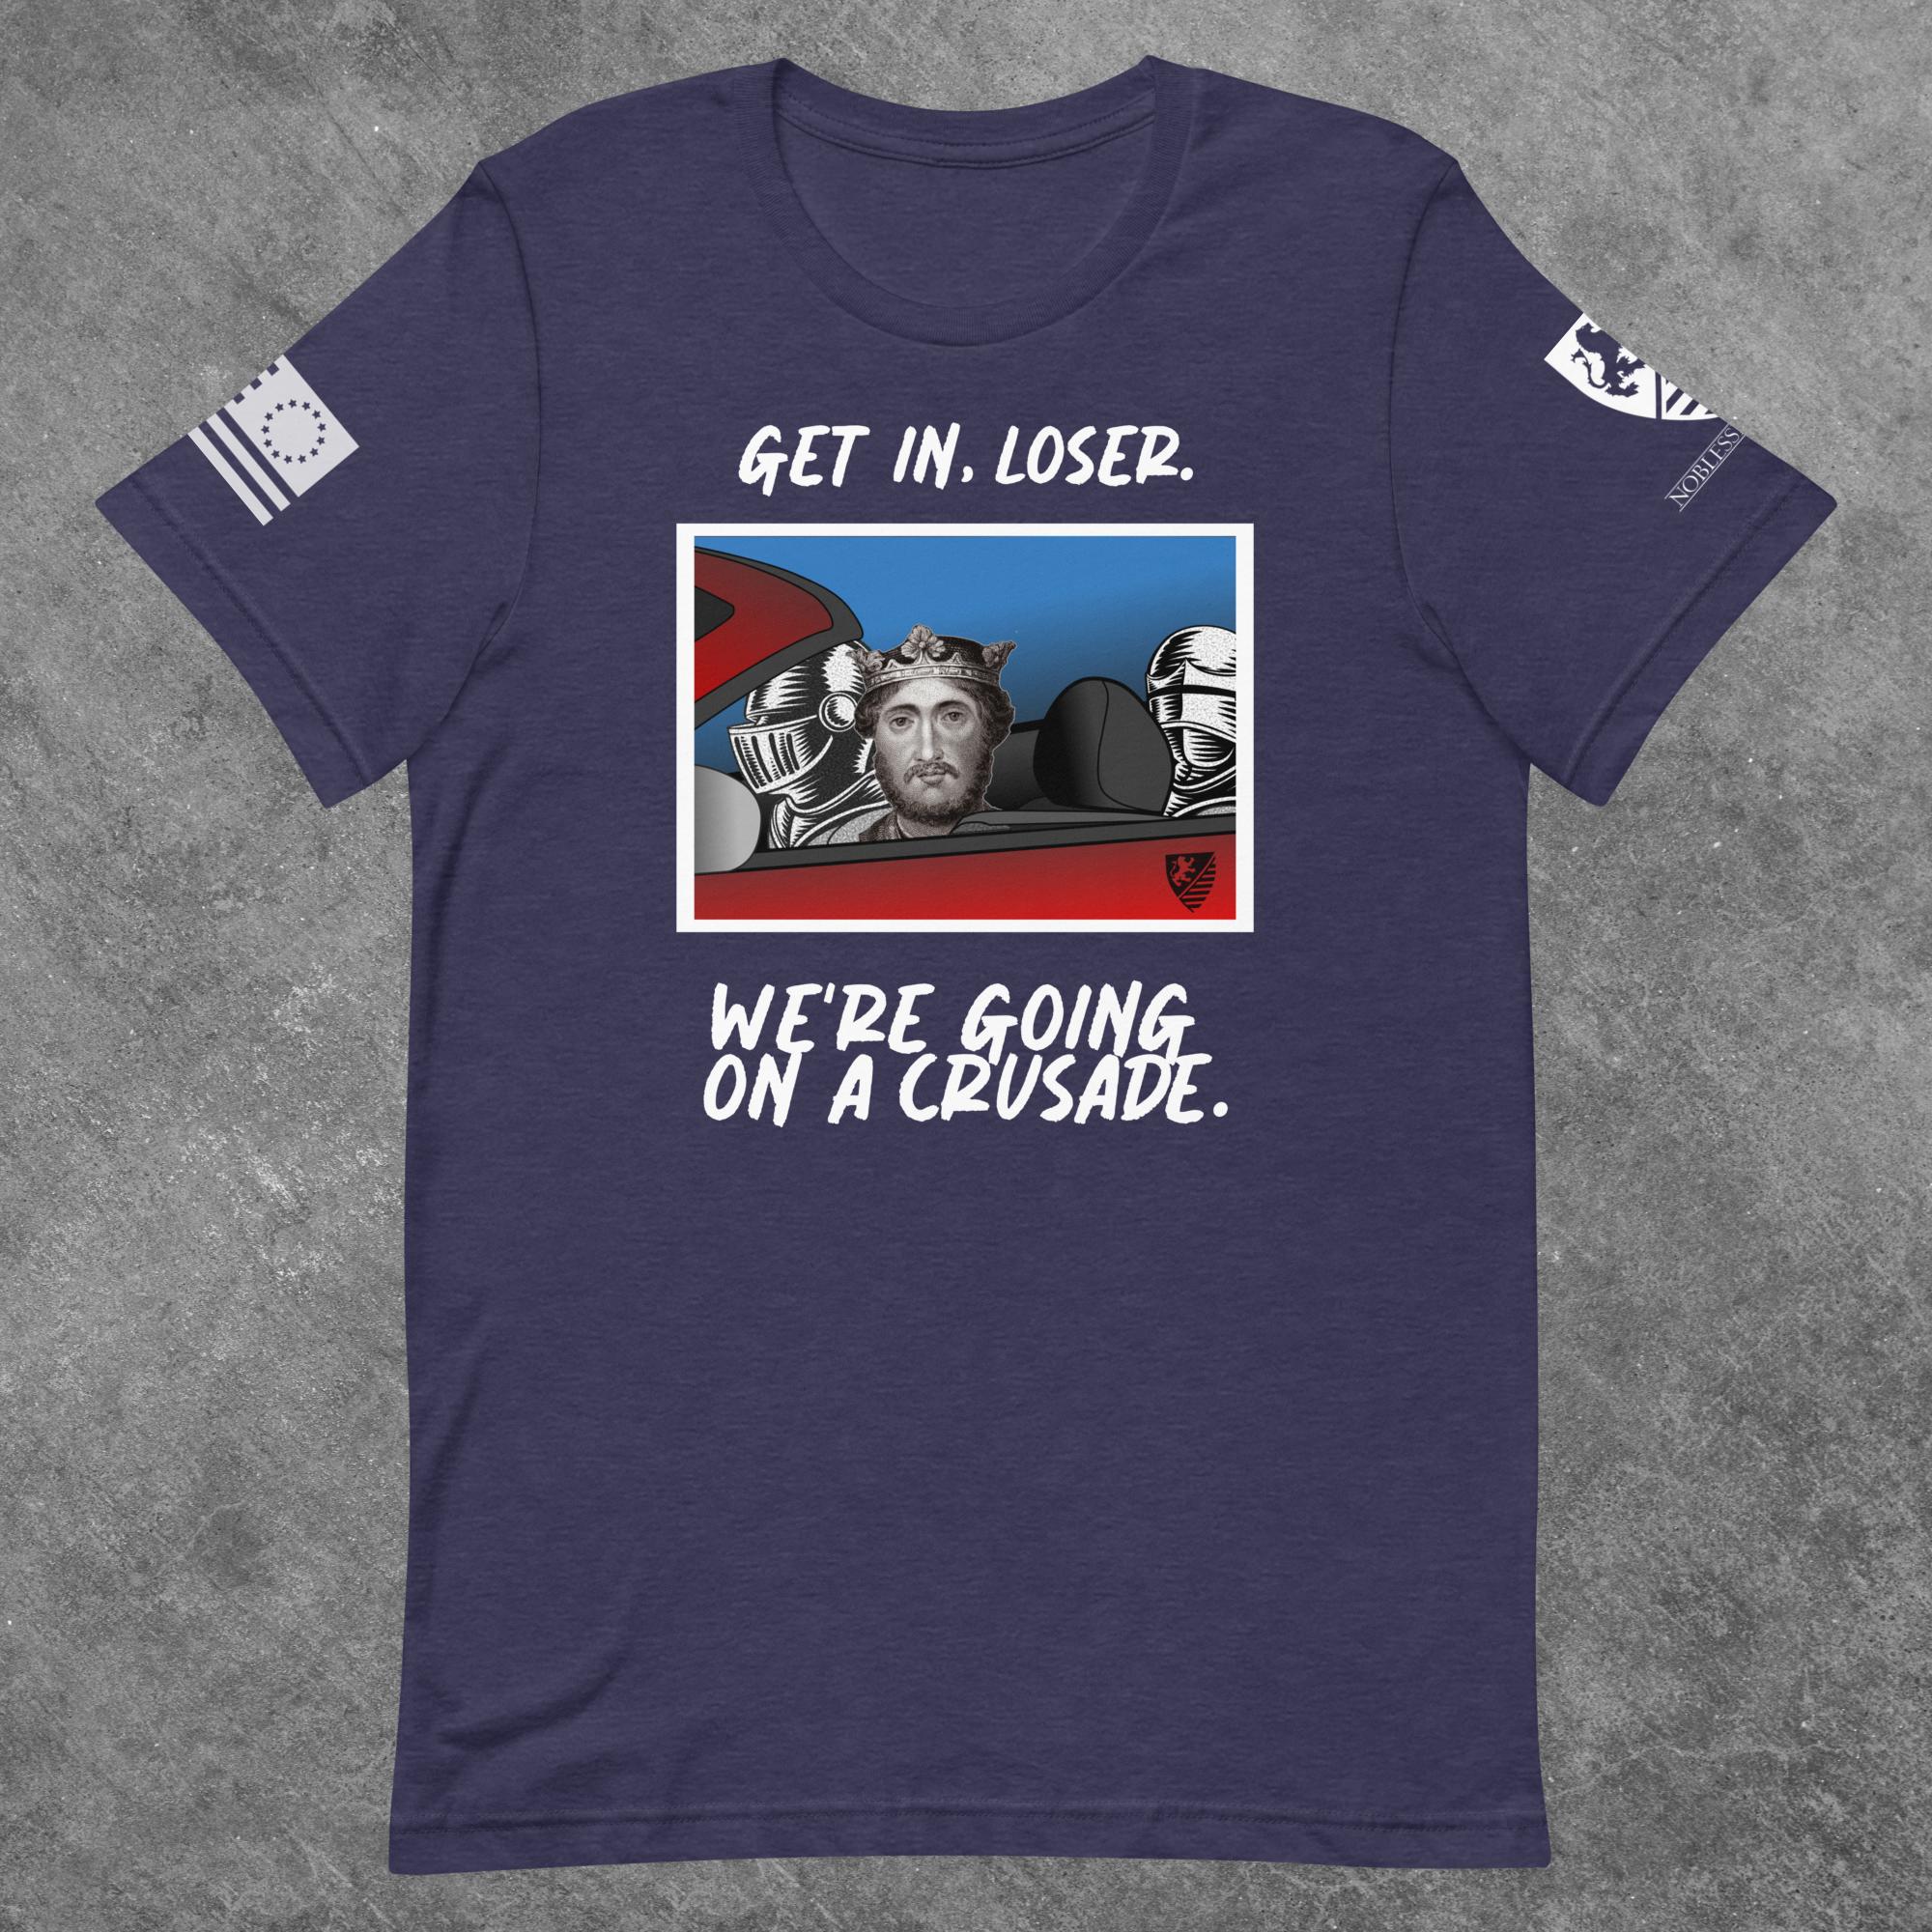 Get In Loser, Crusade - Heather T-shirt - Noblesse Oblige Apparel